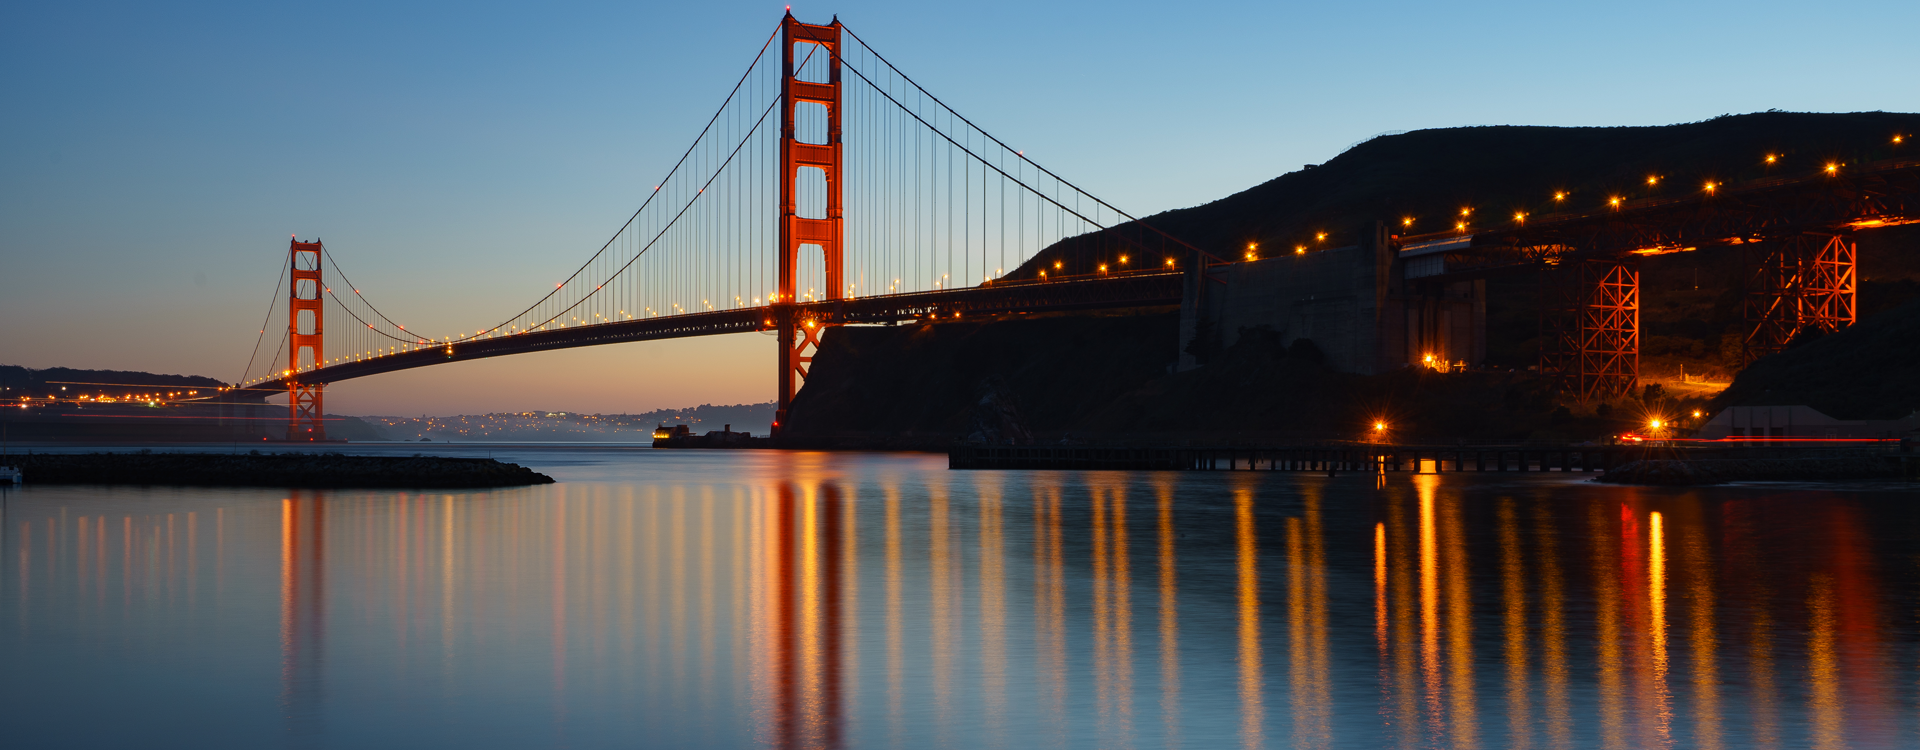 nighttime view of Golden Gate bridge